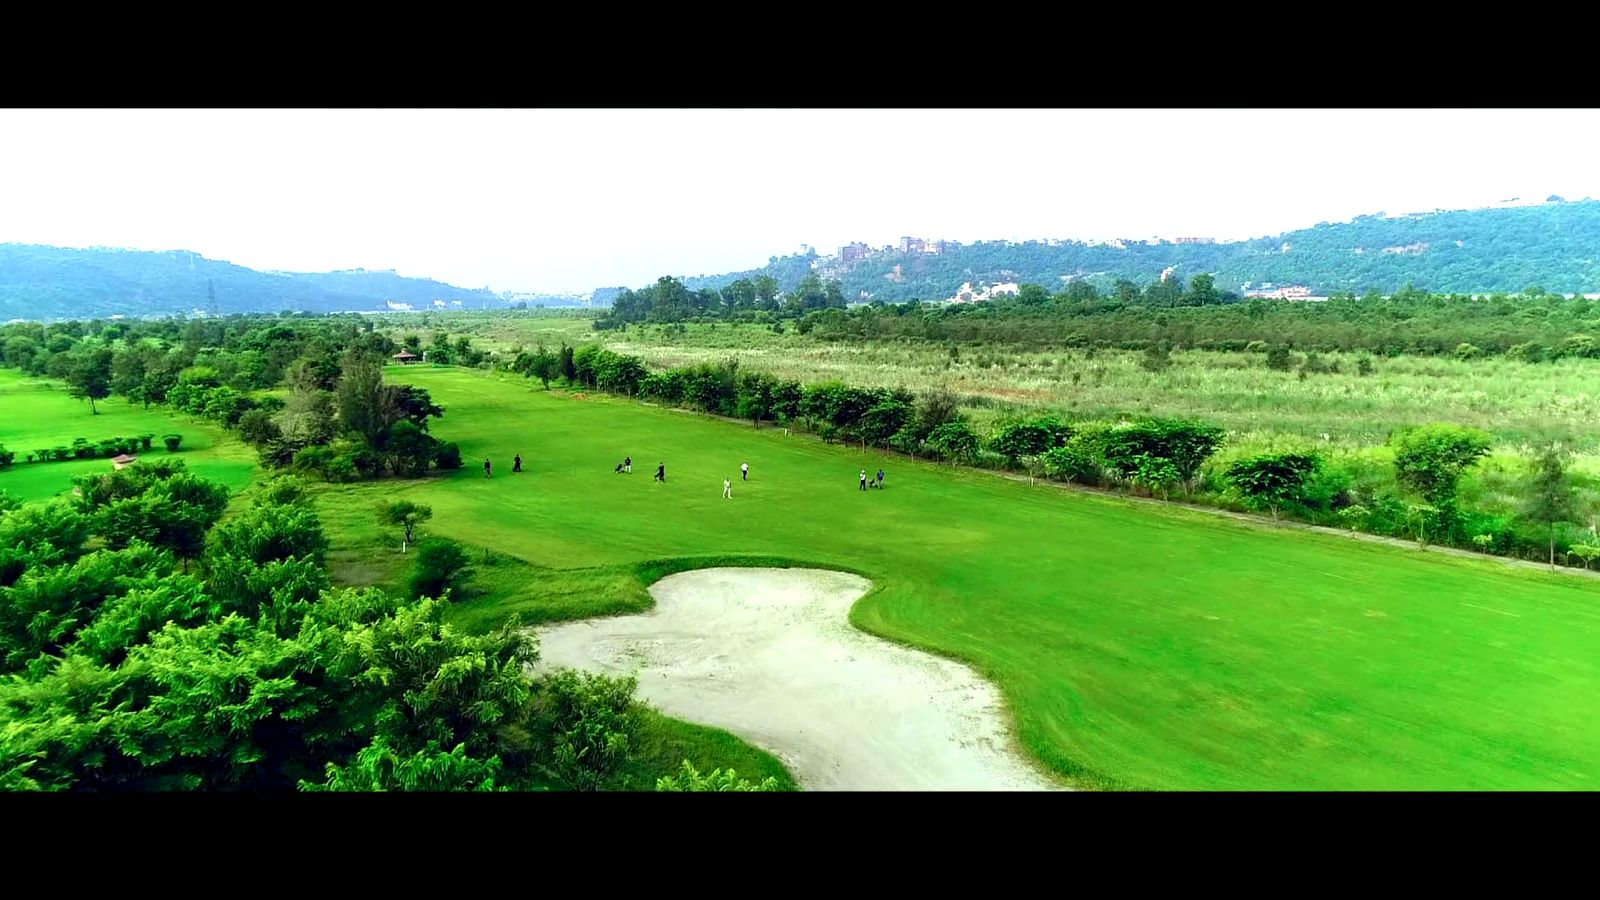 Jammu Tawi Golf Course. Taking Elitist’ Game to Masses